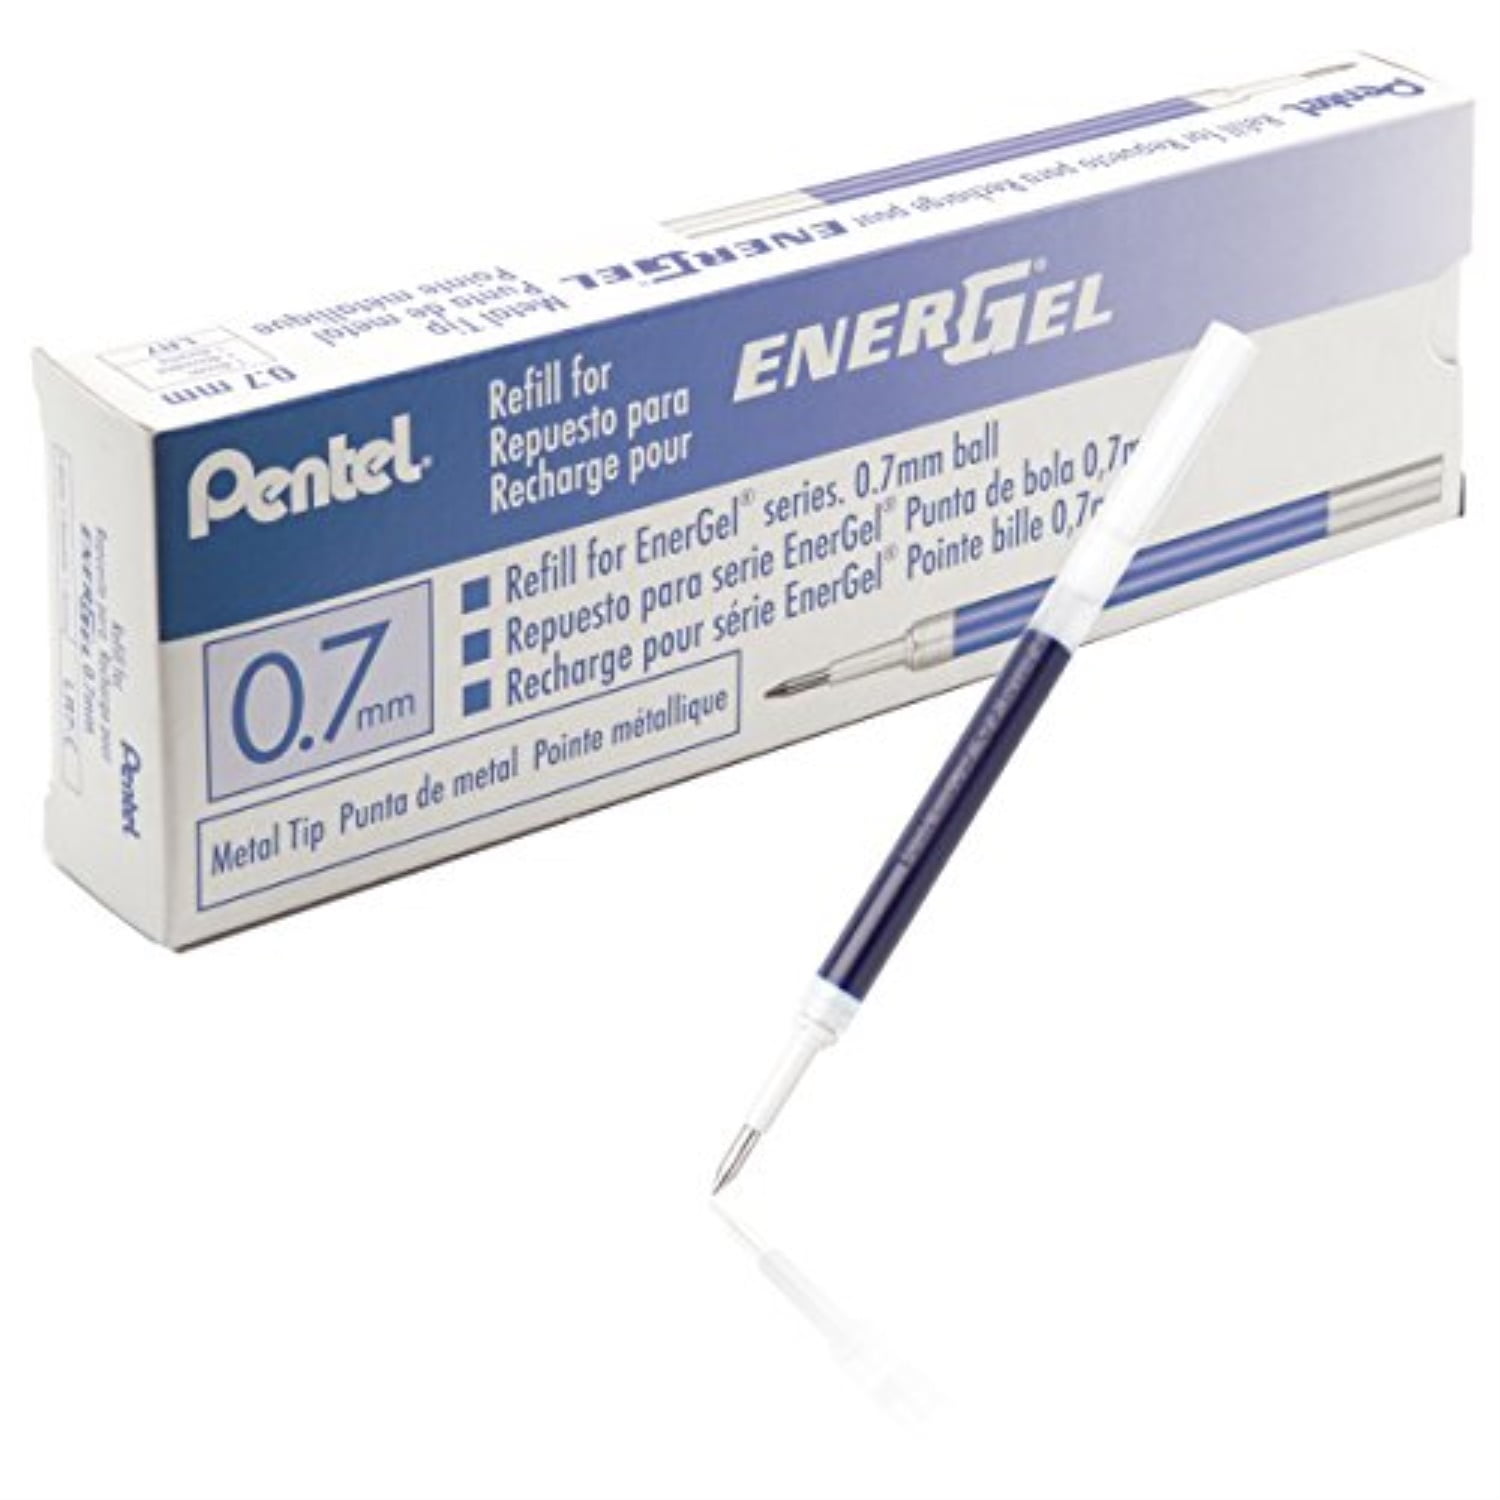 pentel refill ink for bl57/bl77 energel liquid gel pen, 0.7mm, metal tip,  blue ink, box of 12 (lr7-c-12)